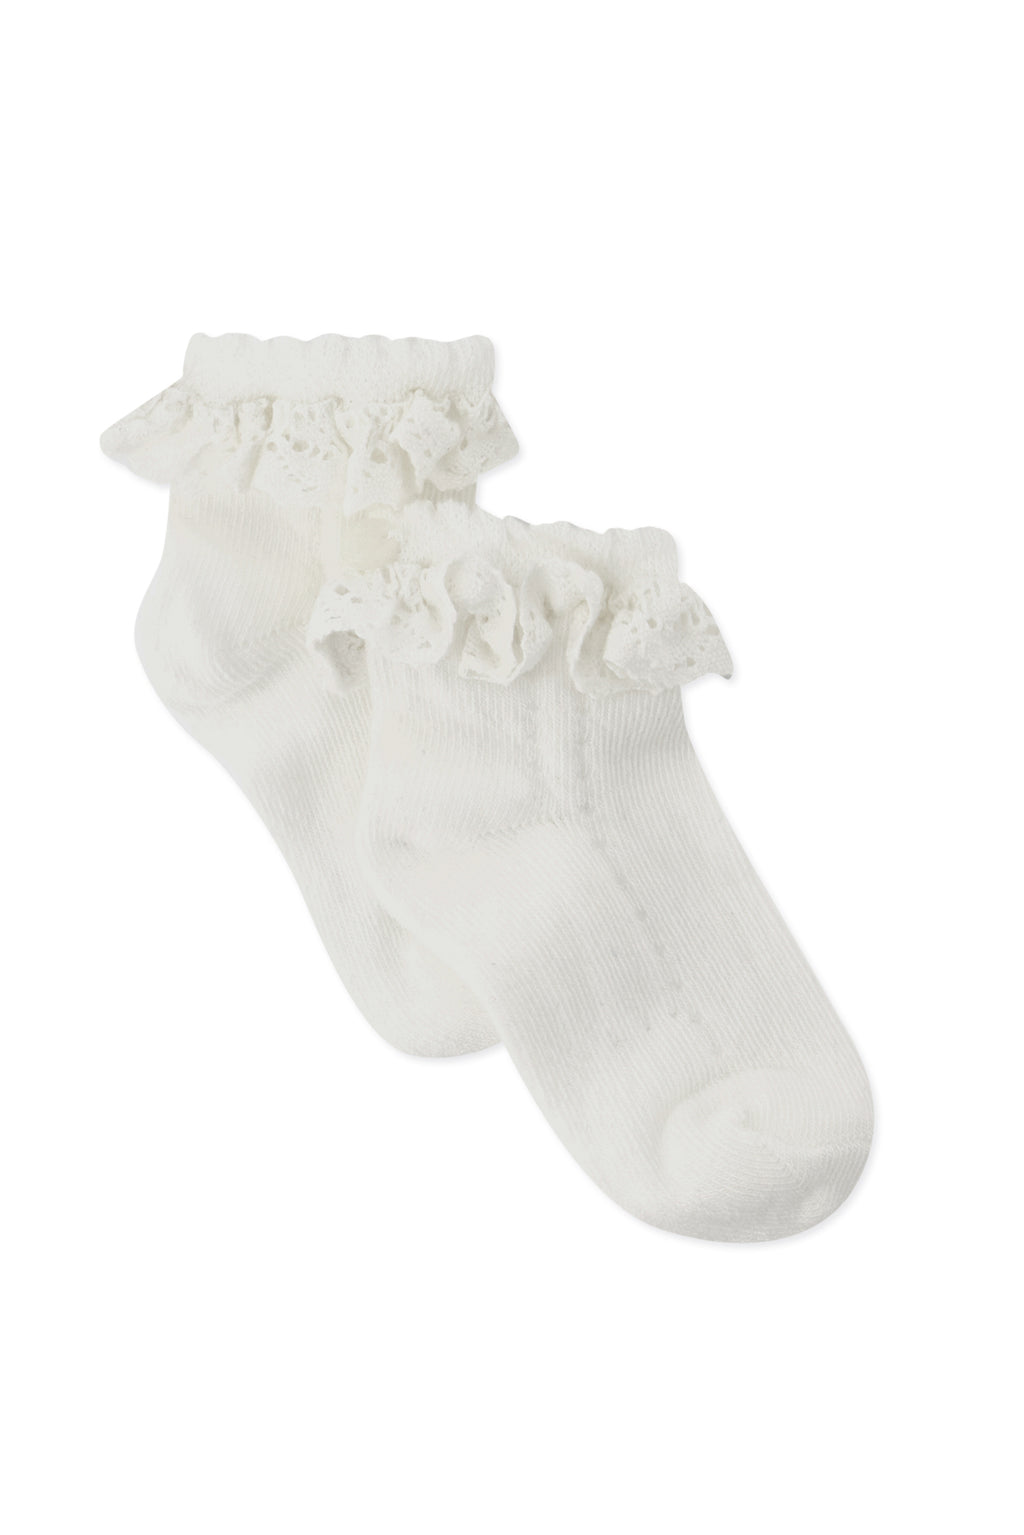 Socks - White Ruffles